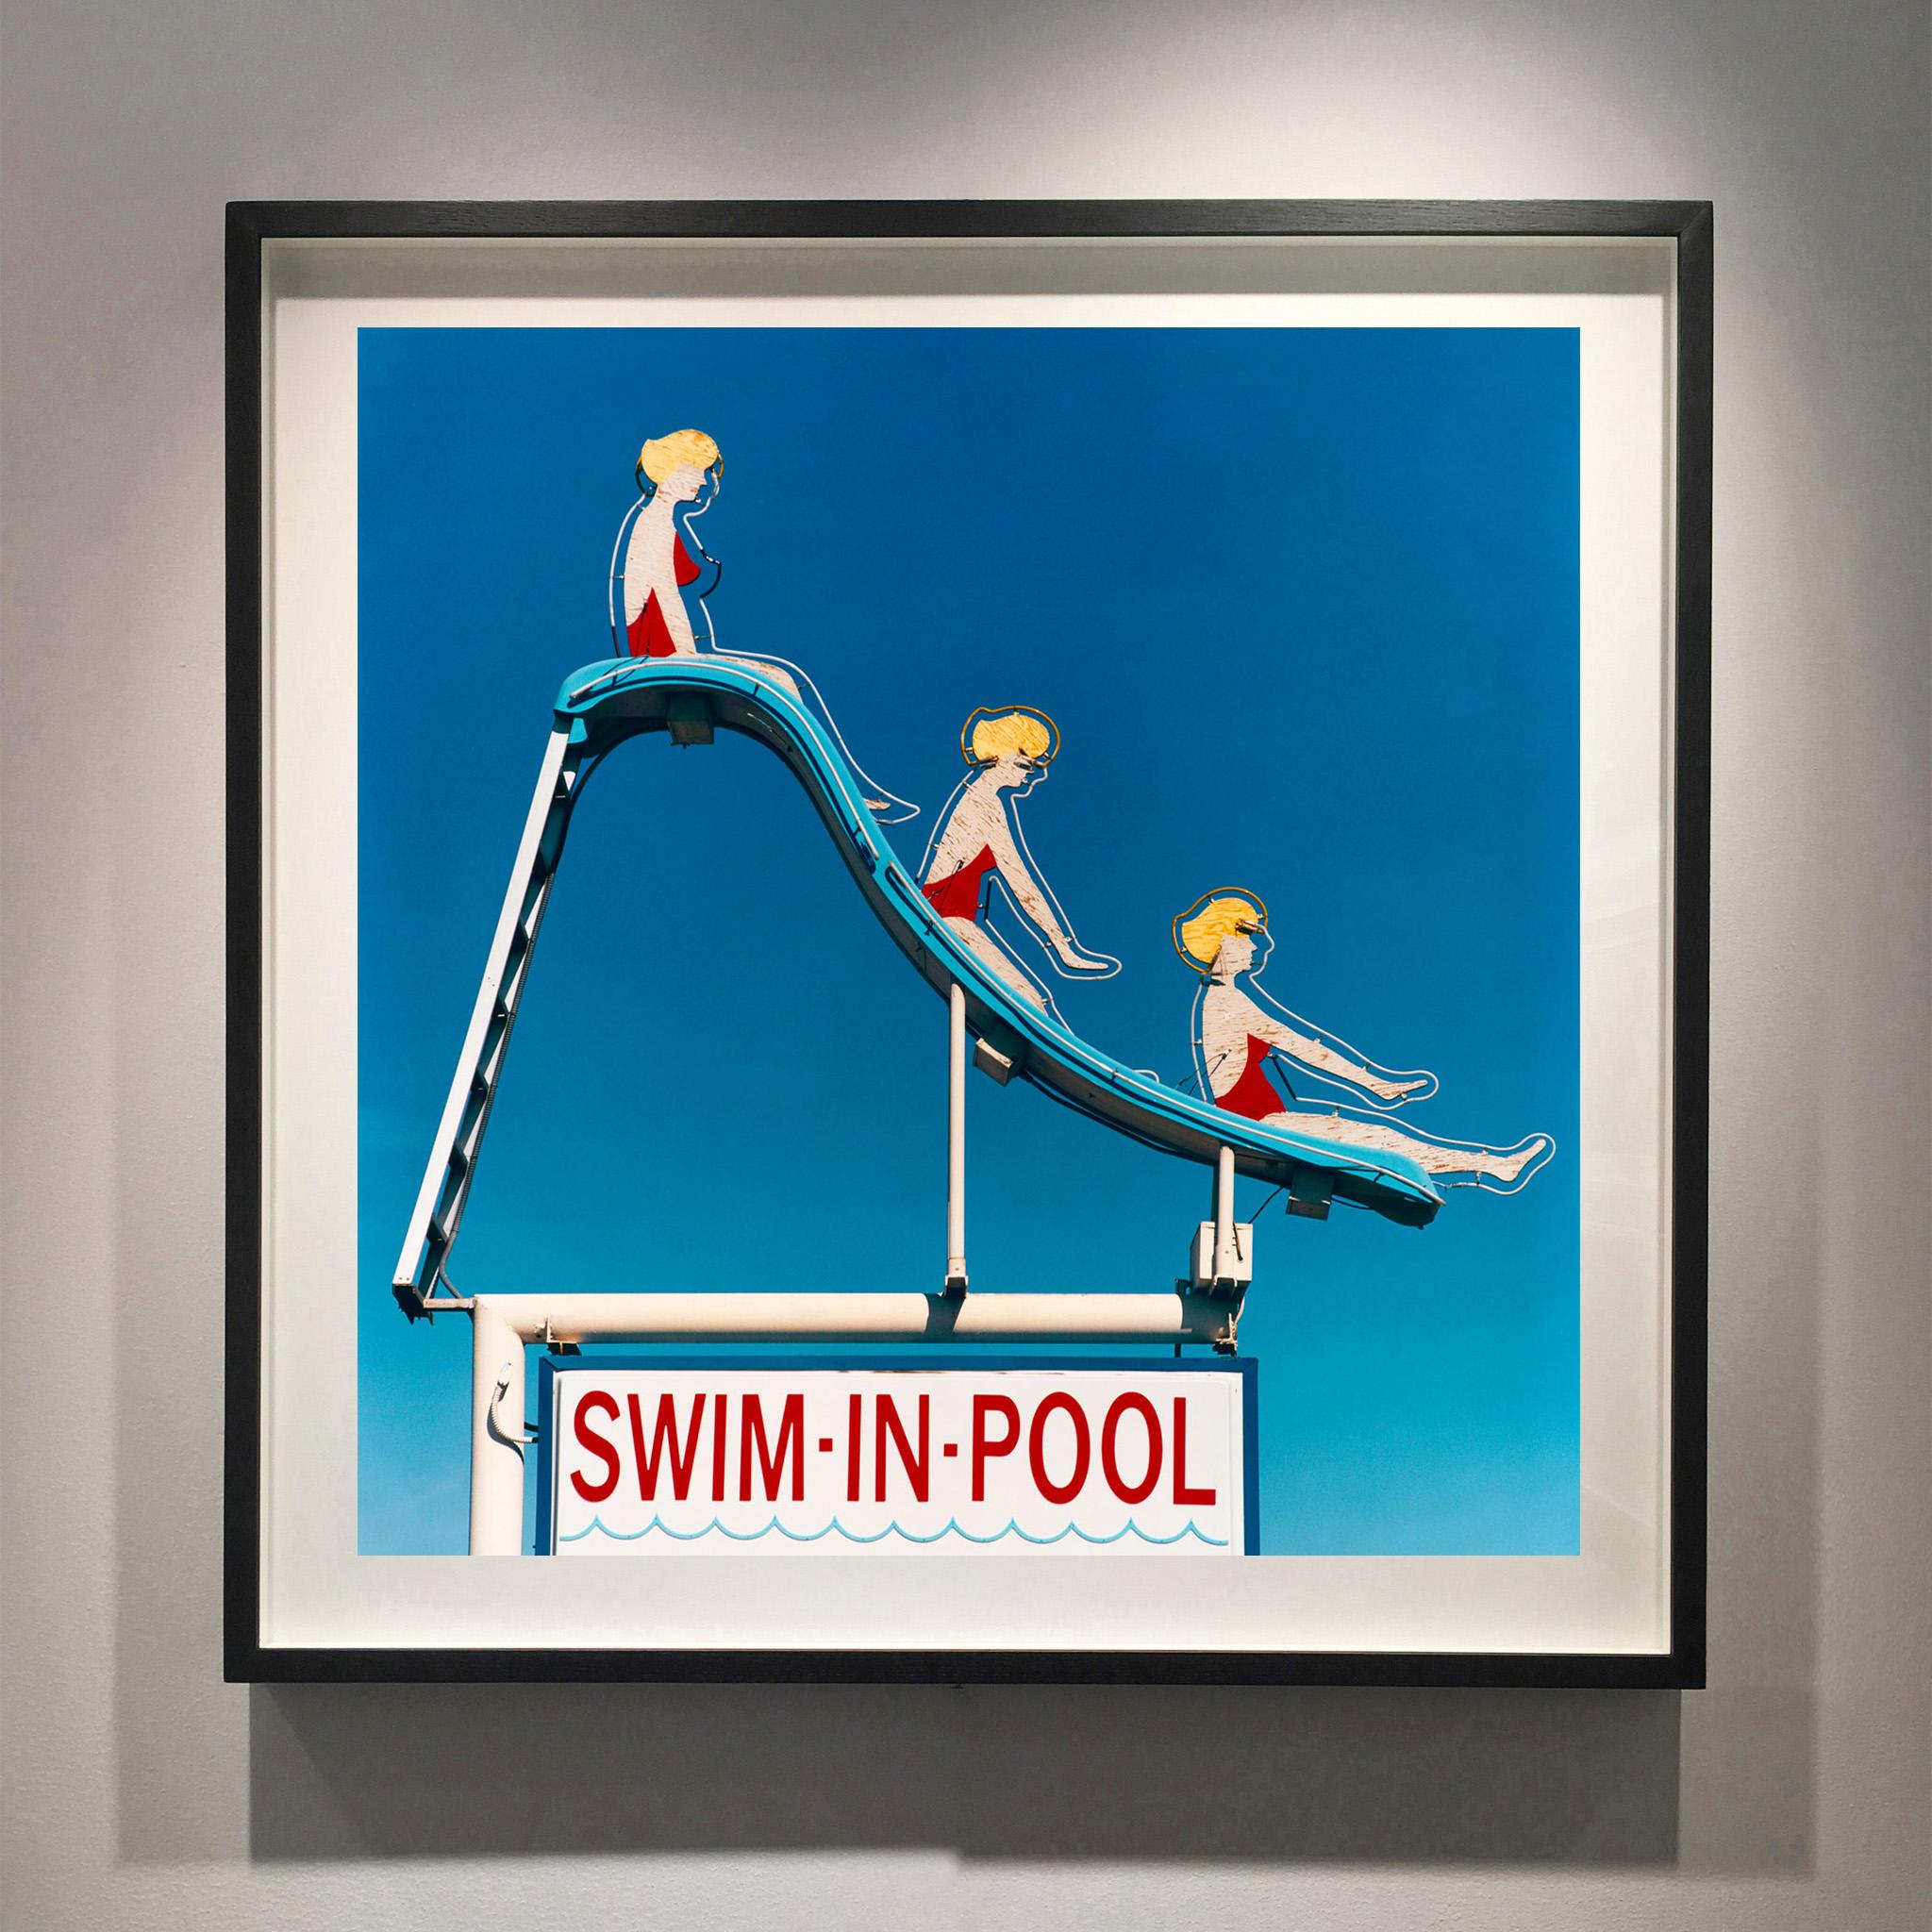 Swim-in-Pool, Las Vegas, Nevada - Americana Pop Art Color Photography - Print by Richard Heeps